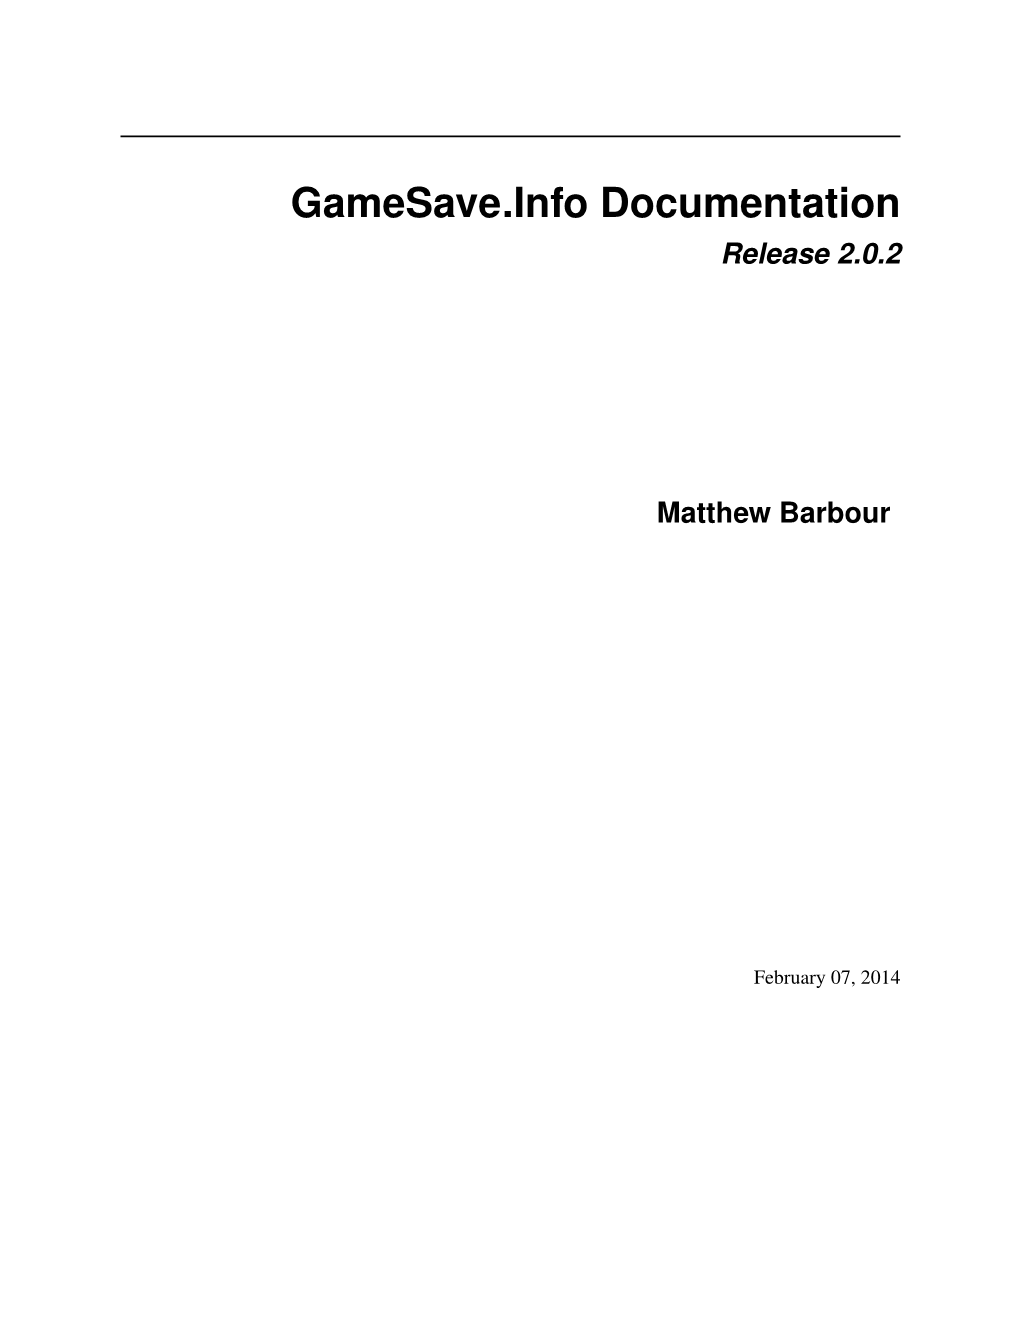 Gamesave.Info Documentation Release 2.0.2